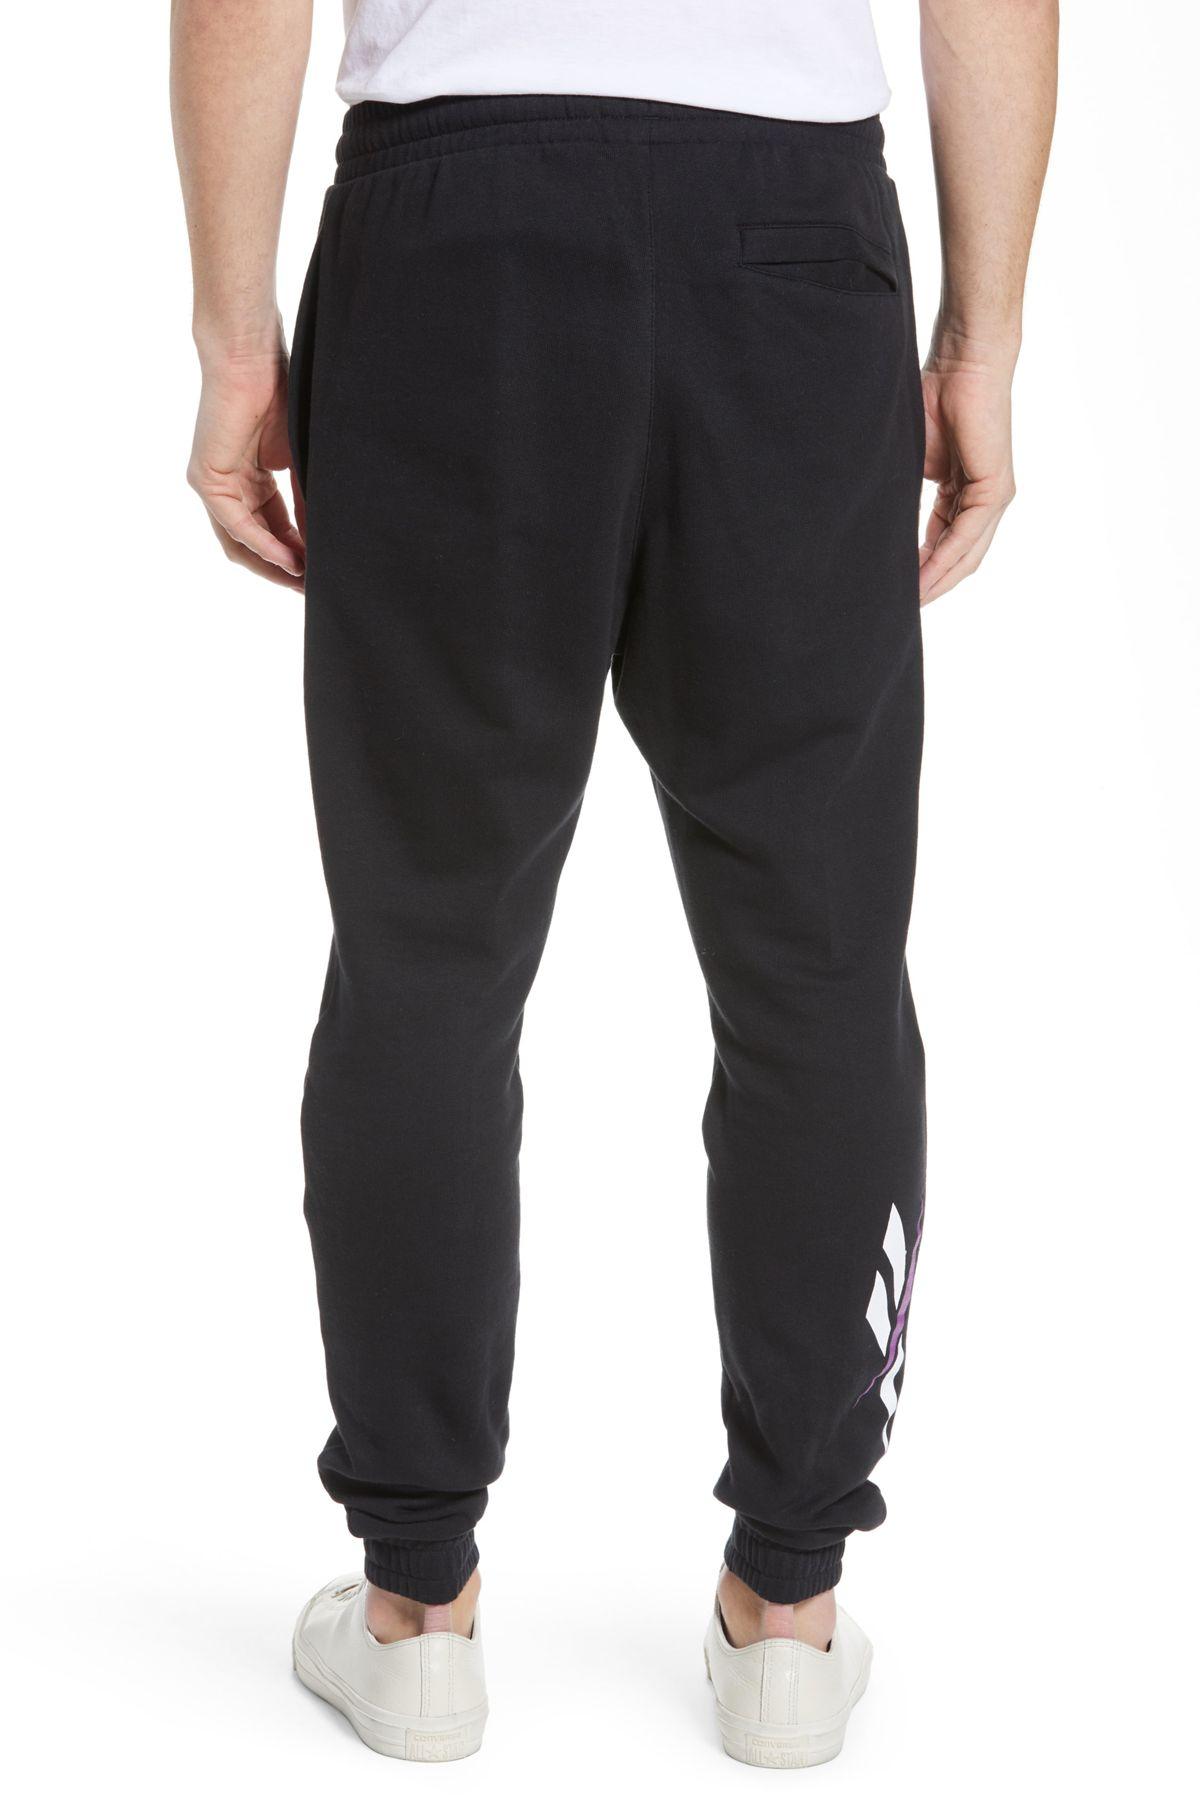 Reebok Vector Sweatpants in Black for 